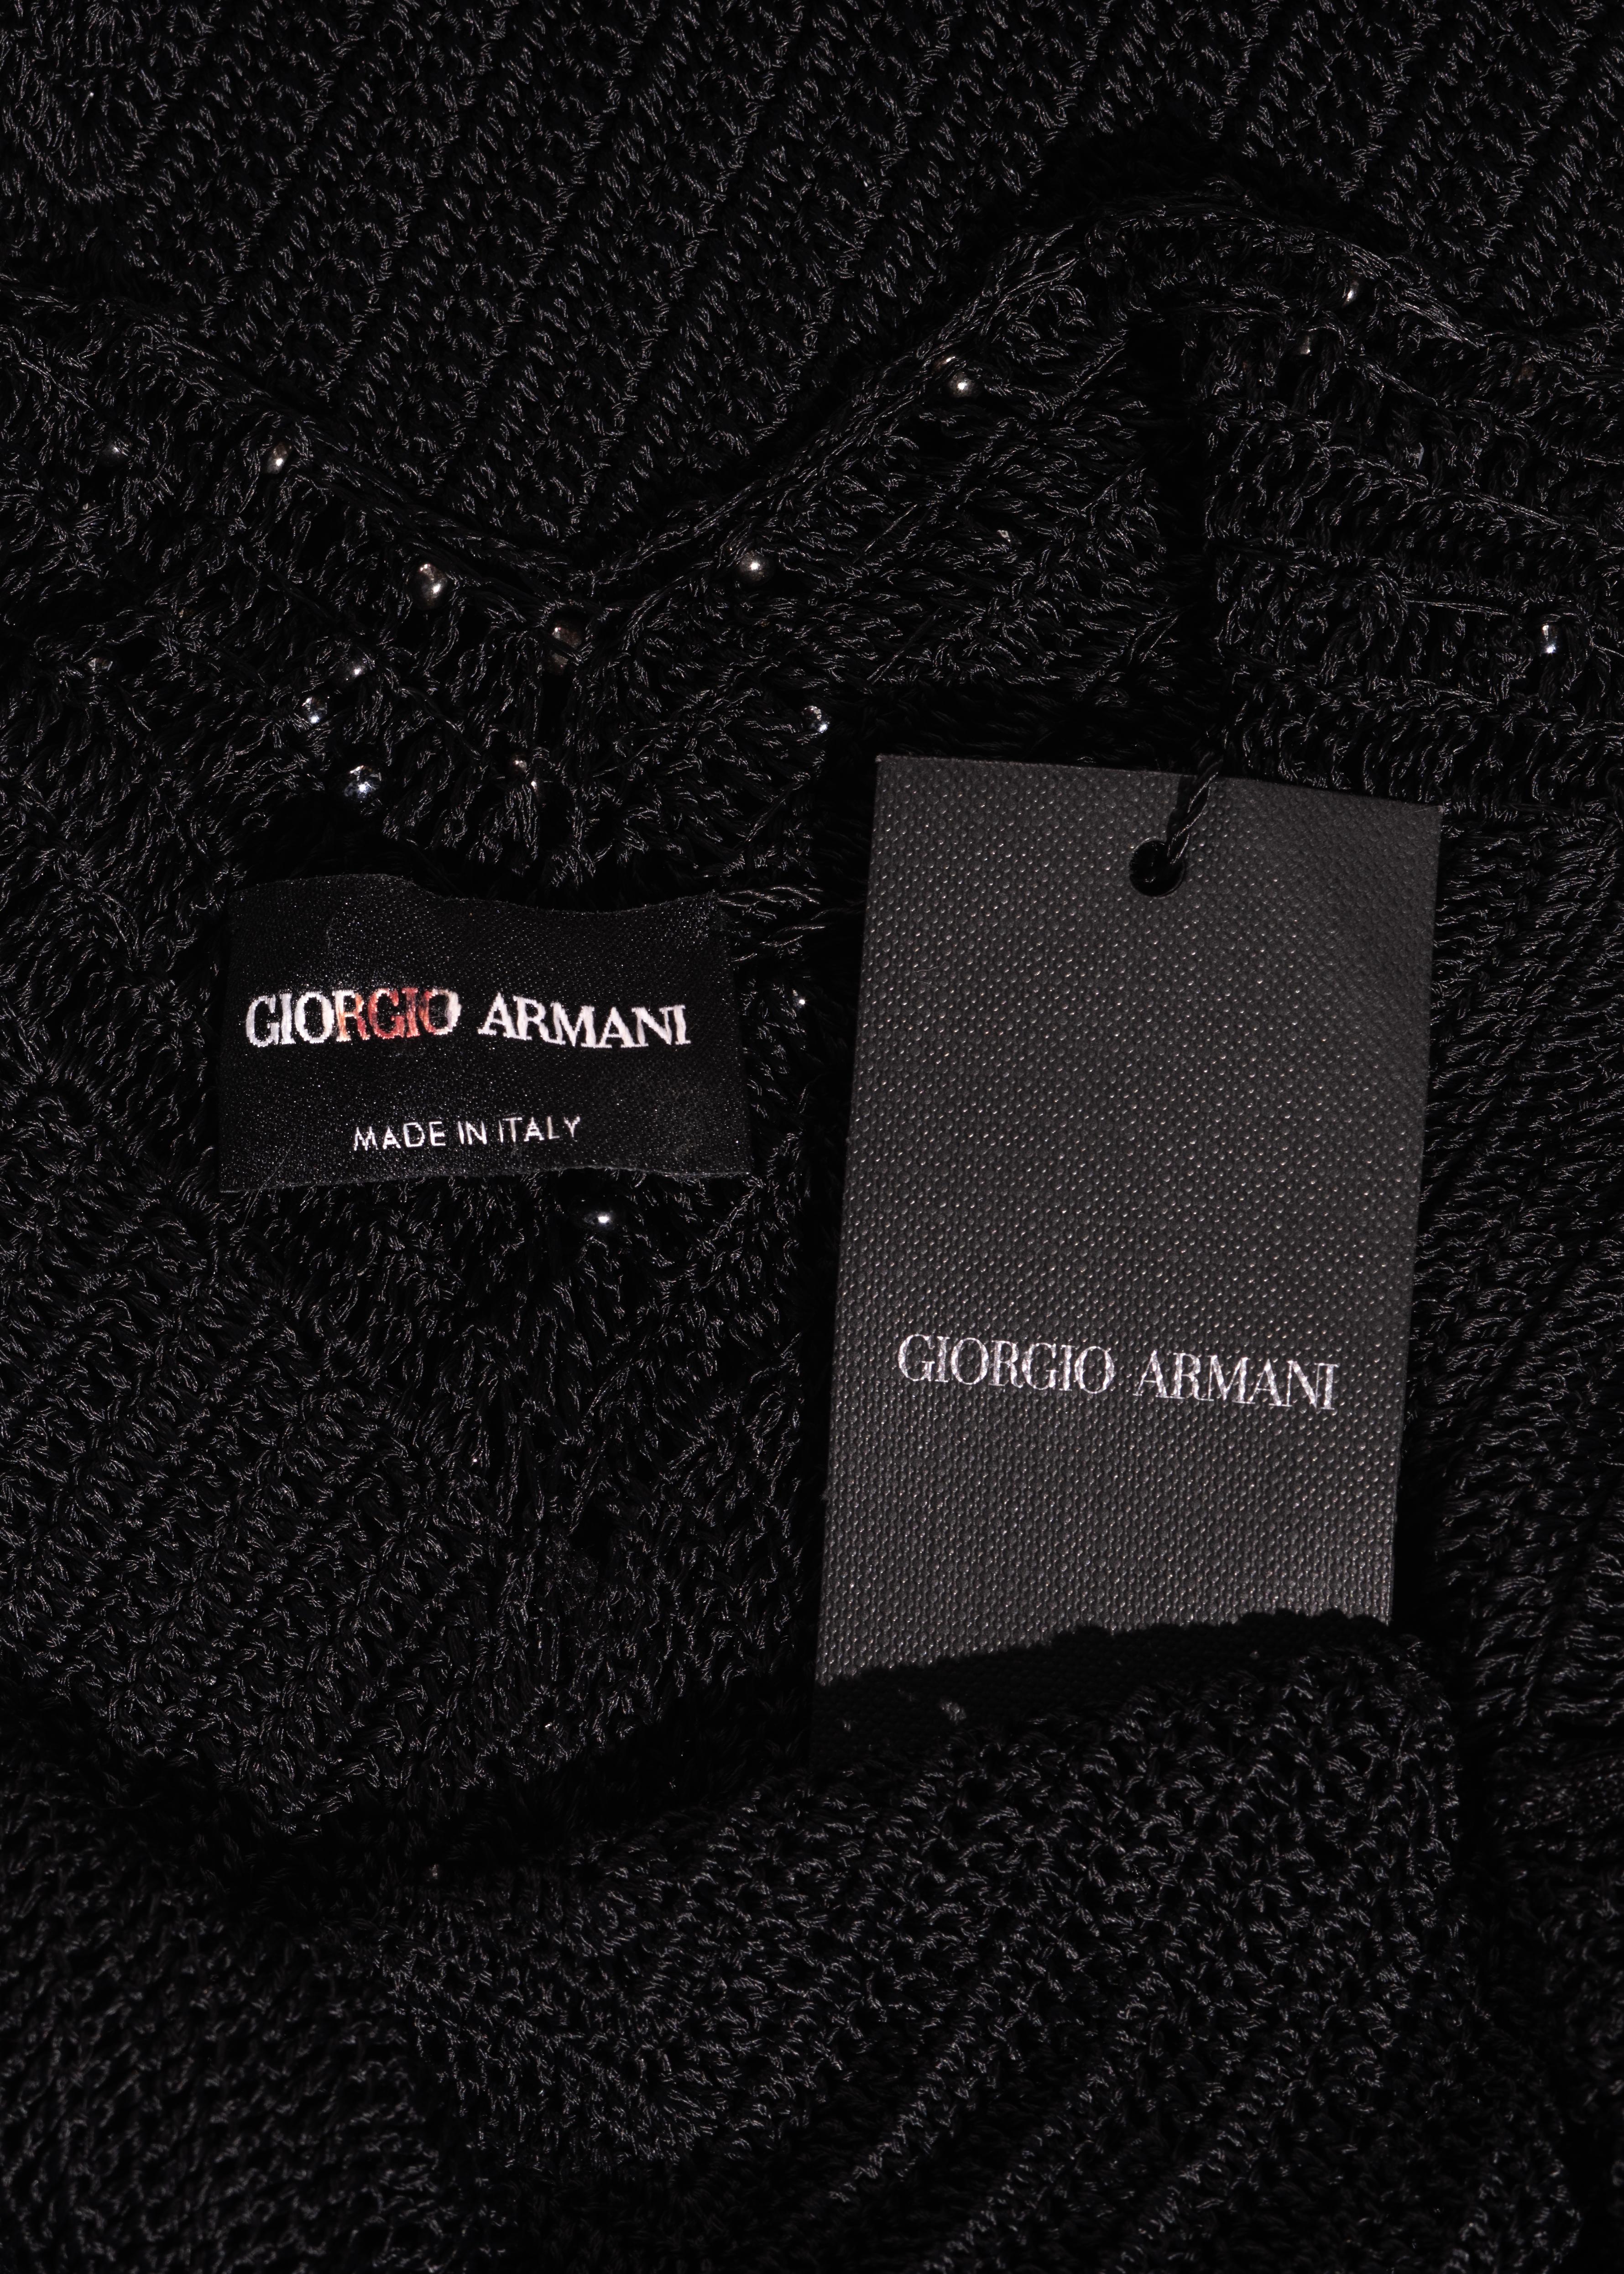 Women's Giorgio Armani black rayon knit beaded maxi dress, c. 2000s